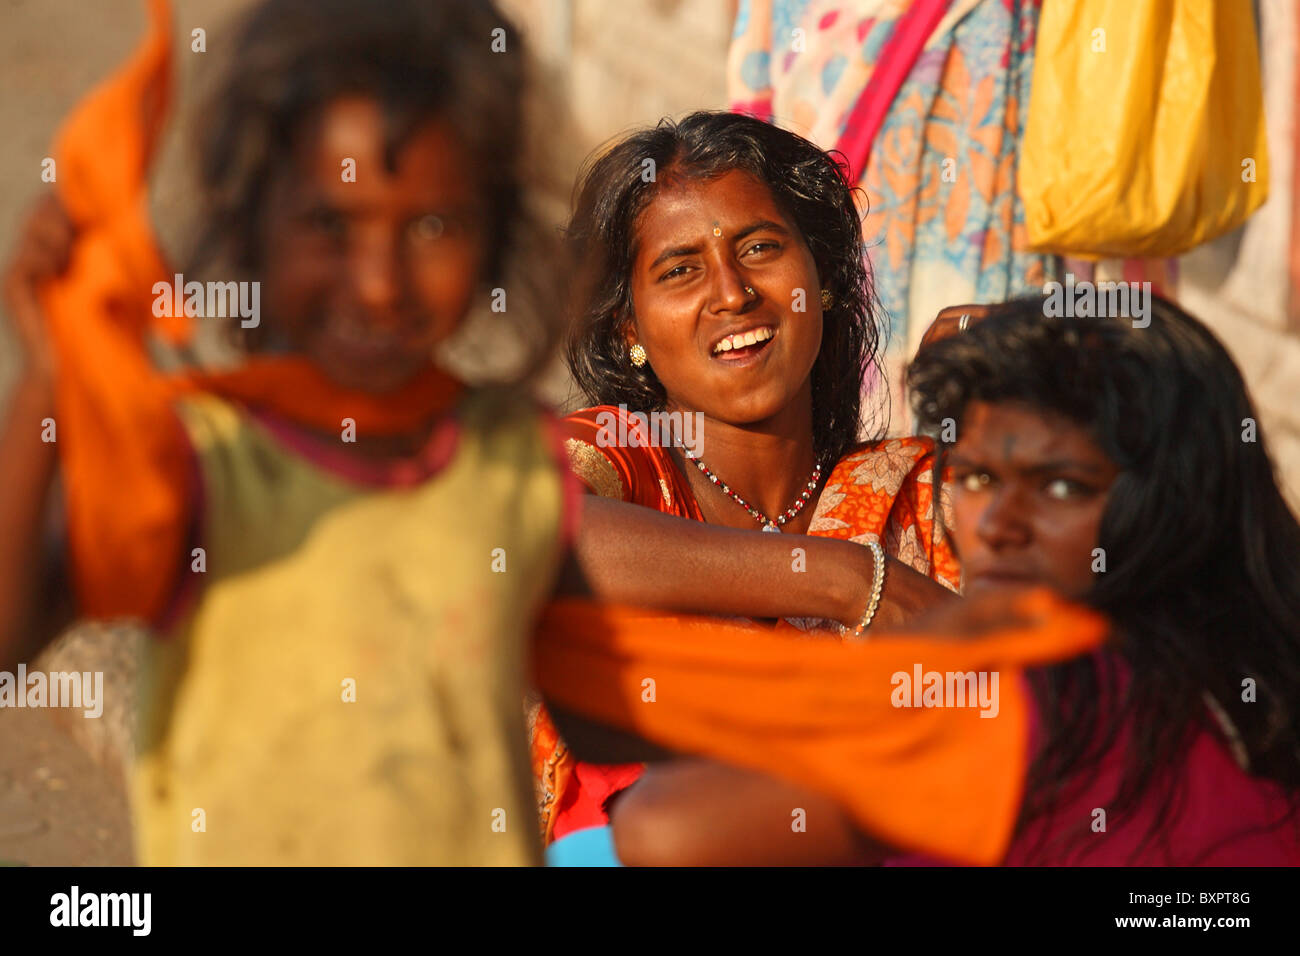 Indian street kids, Mumbai, India Stock Photo